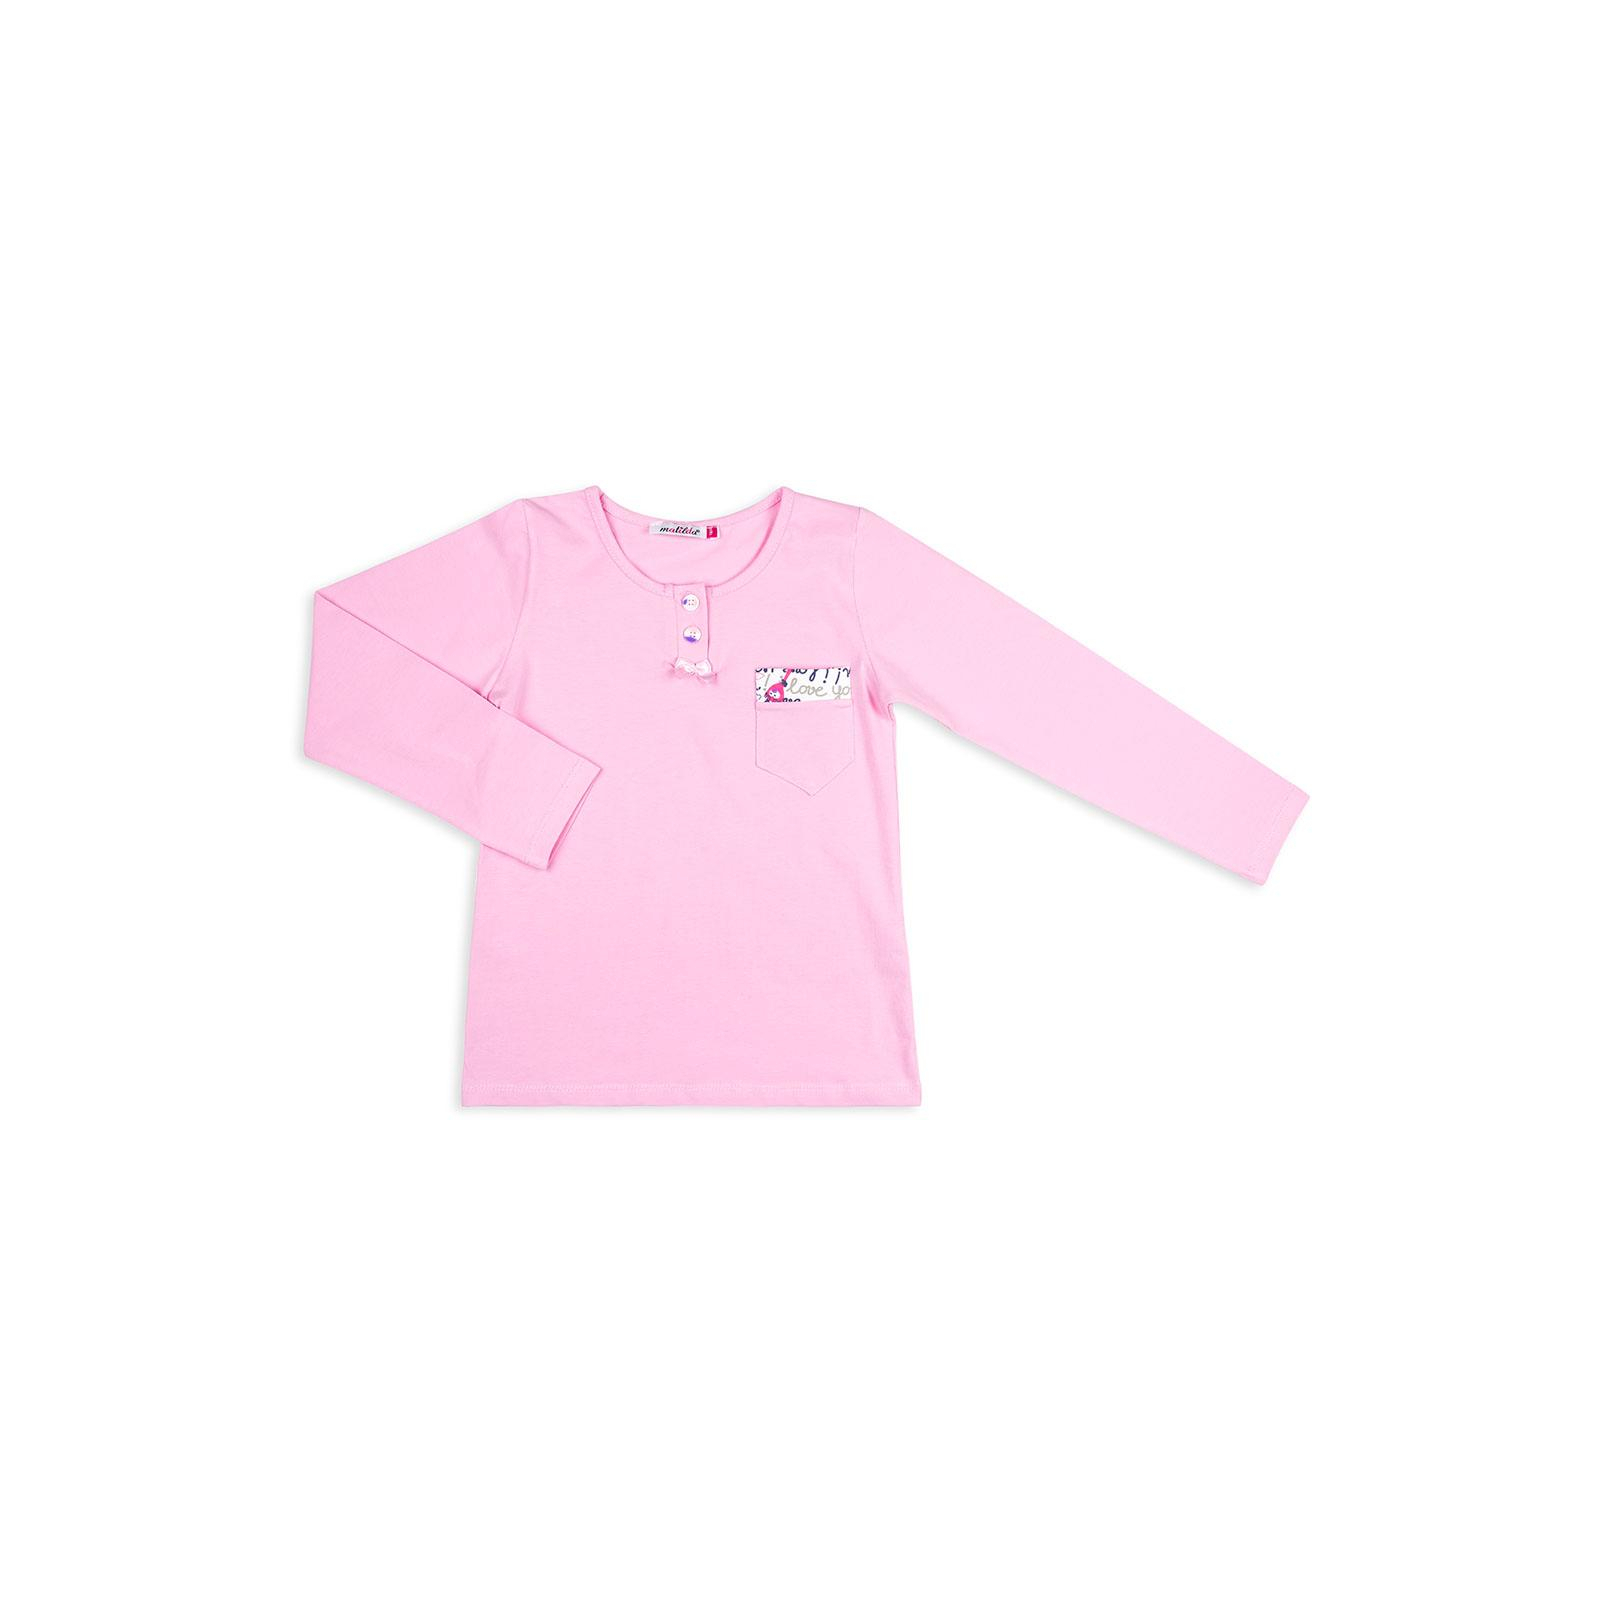 Пижама Matilda с котиками (4158-164G-pink) изображение 2